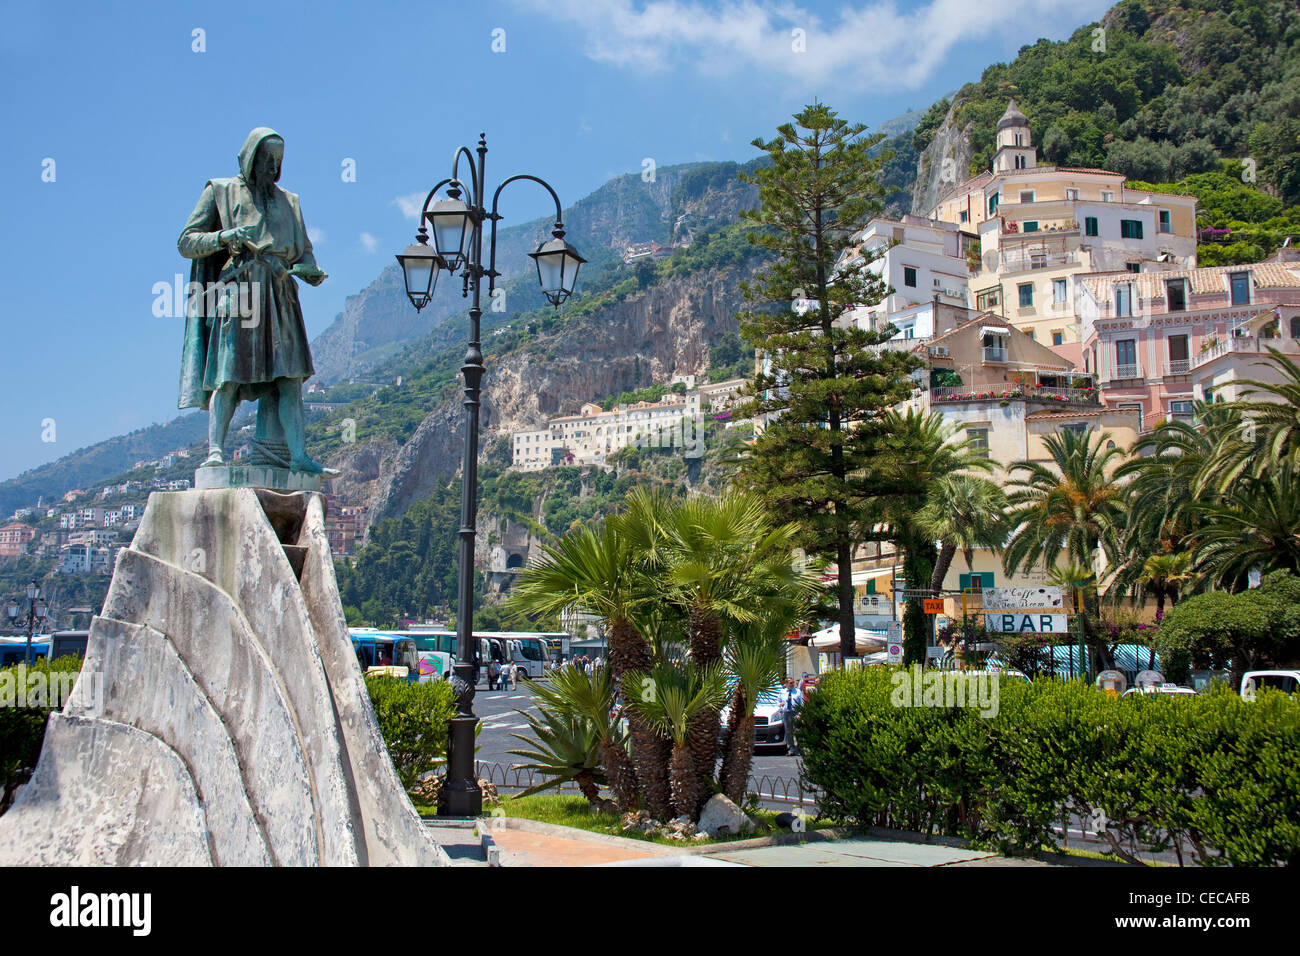 Menorial to Flavio Gioia, inventor of the compass, Amalfi at Amalfi coast, Unesco World Heritage site, Campania, Italy, Mediterranean sea, Europe Stock Photo